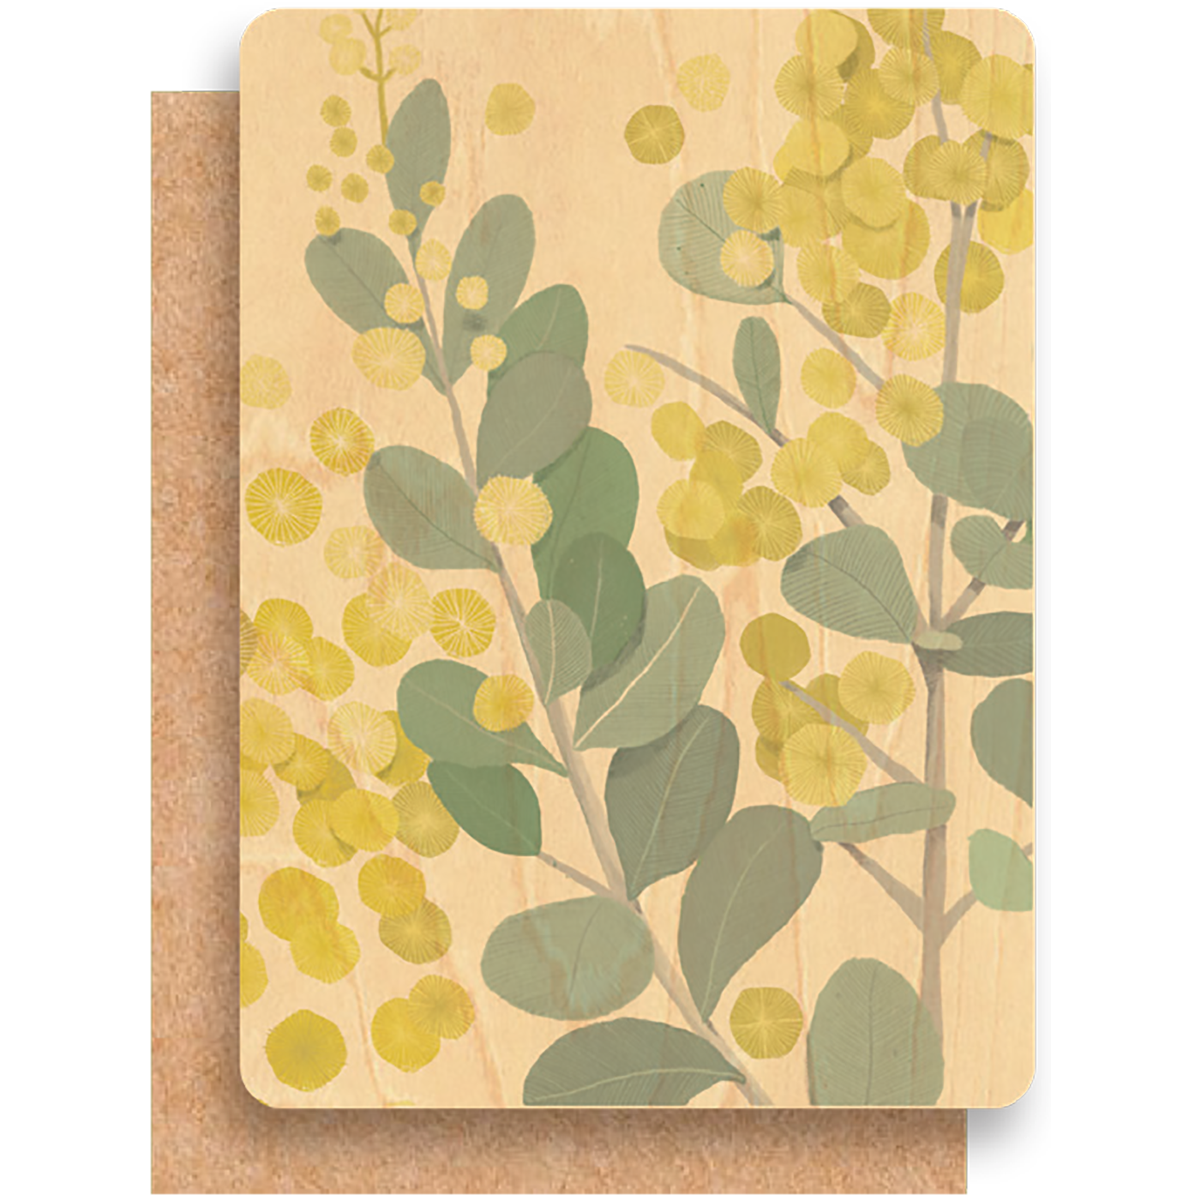 Wood Greeting Card - Golden Wattle